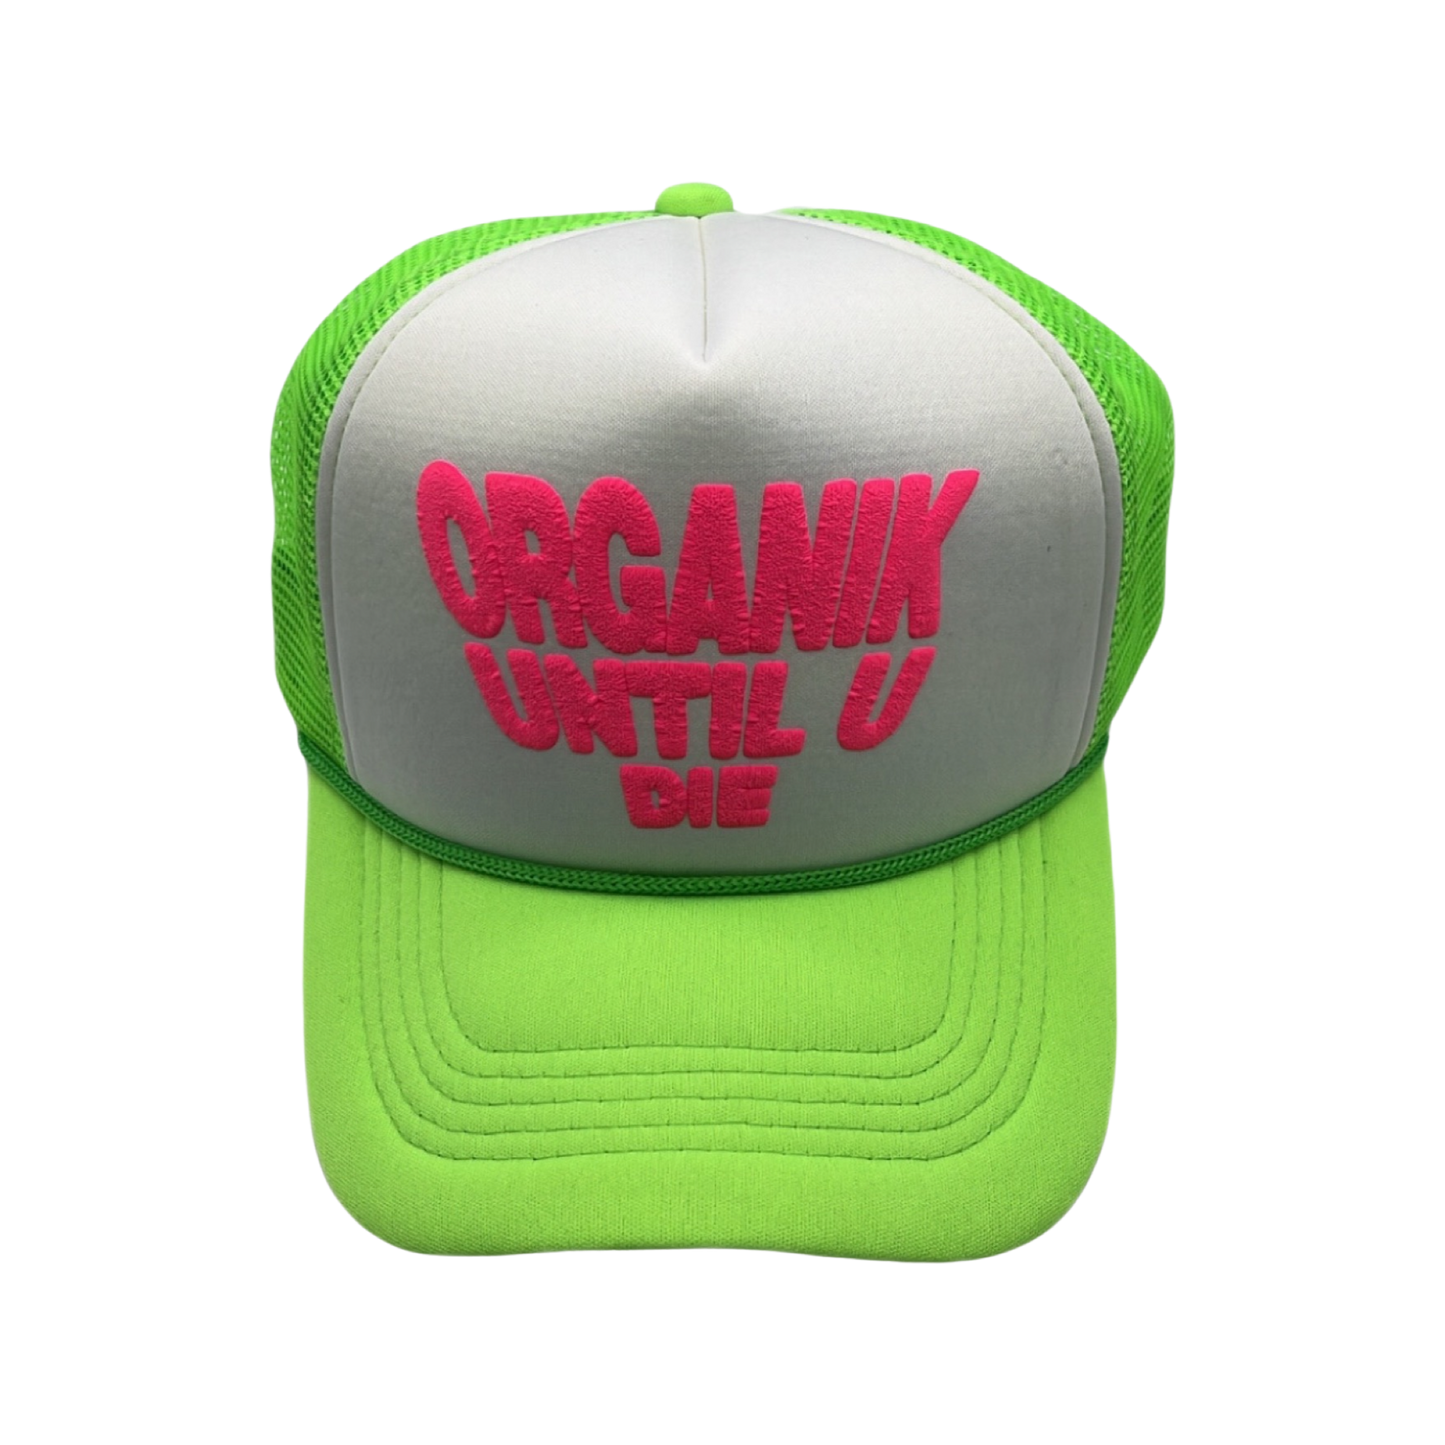 Mr. Organik and Grind Until U Die Trucker Hat Collab Green